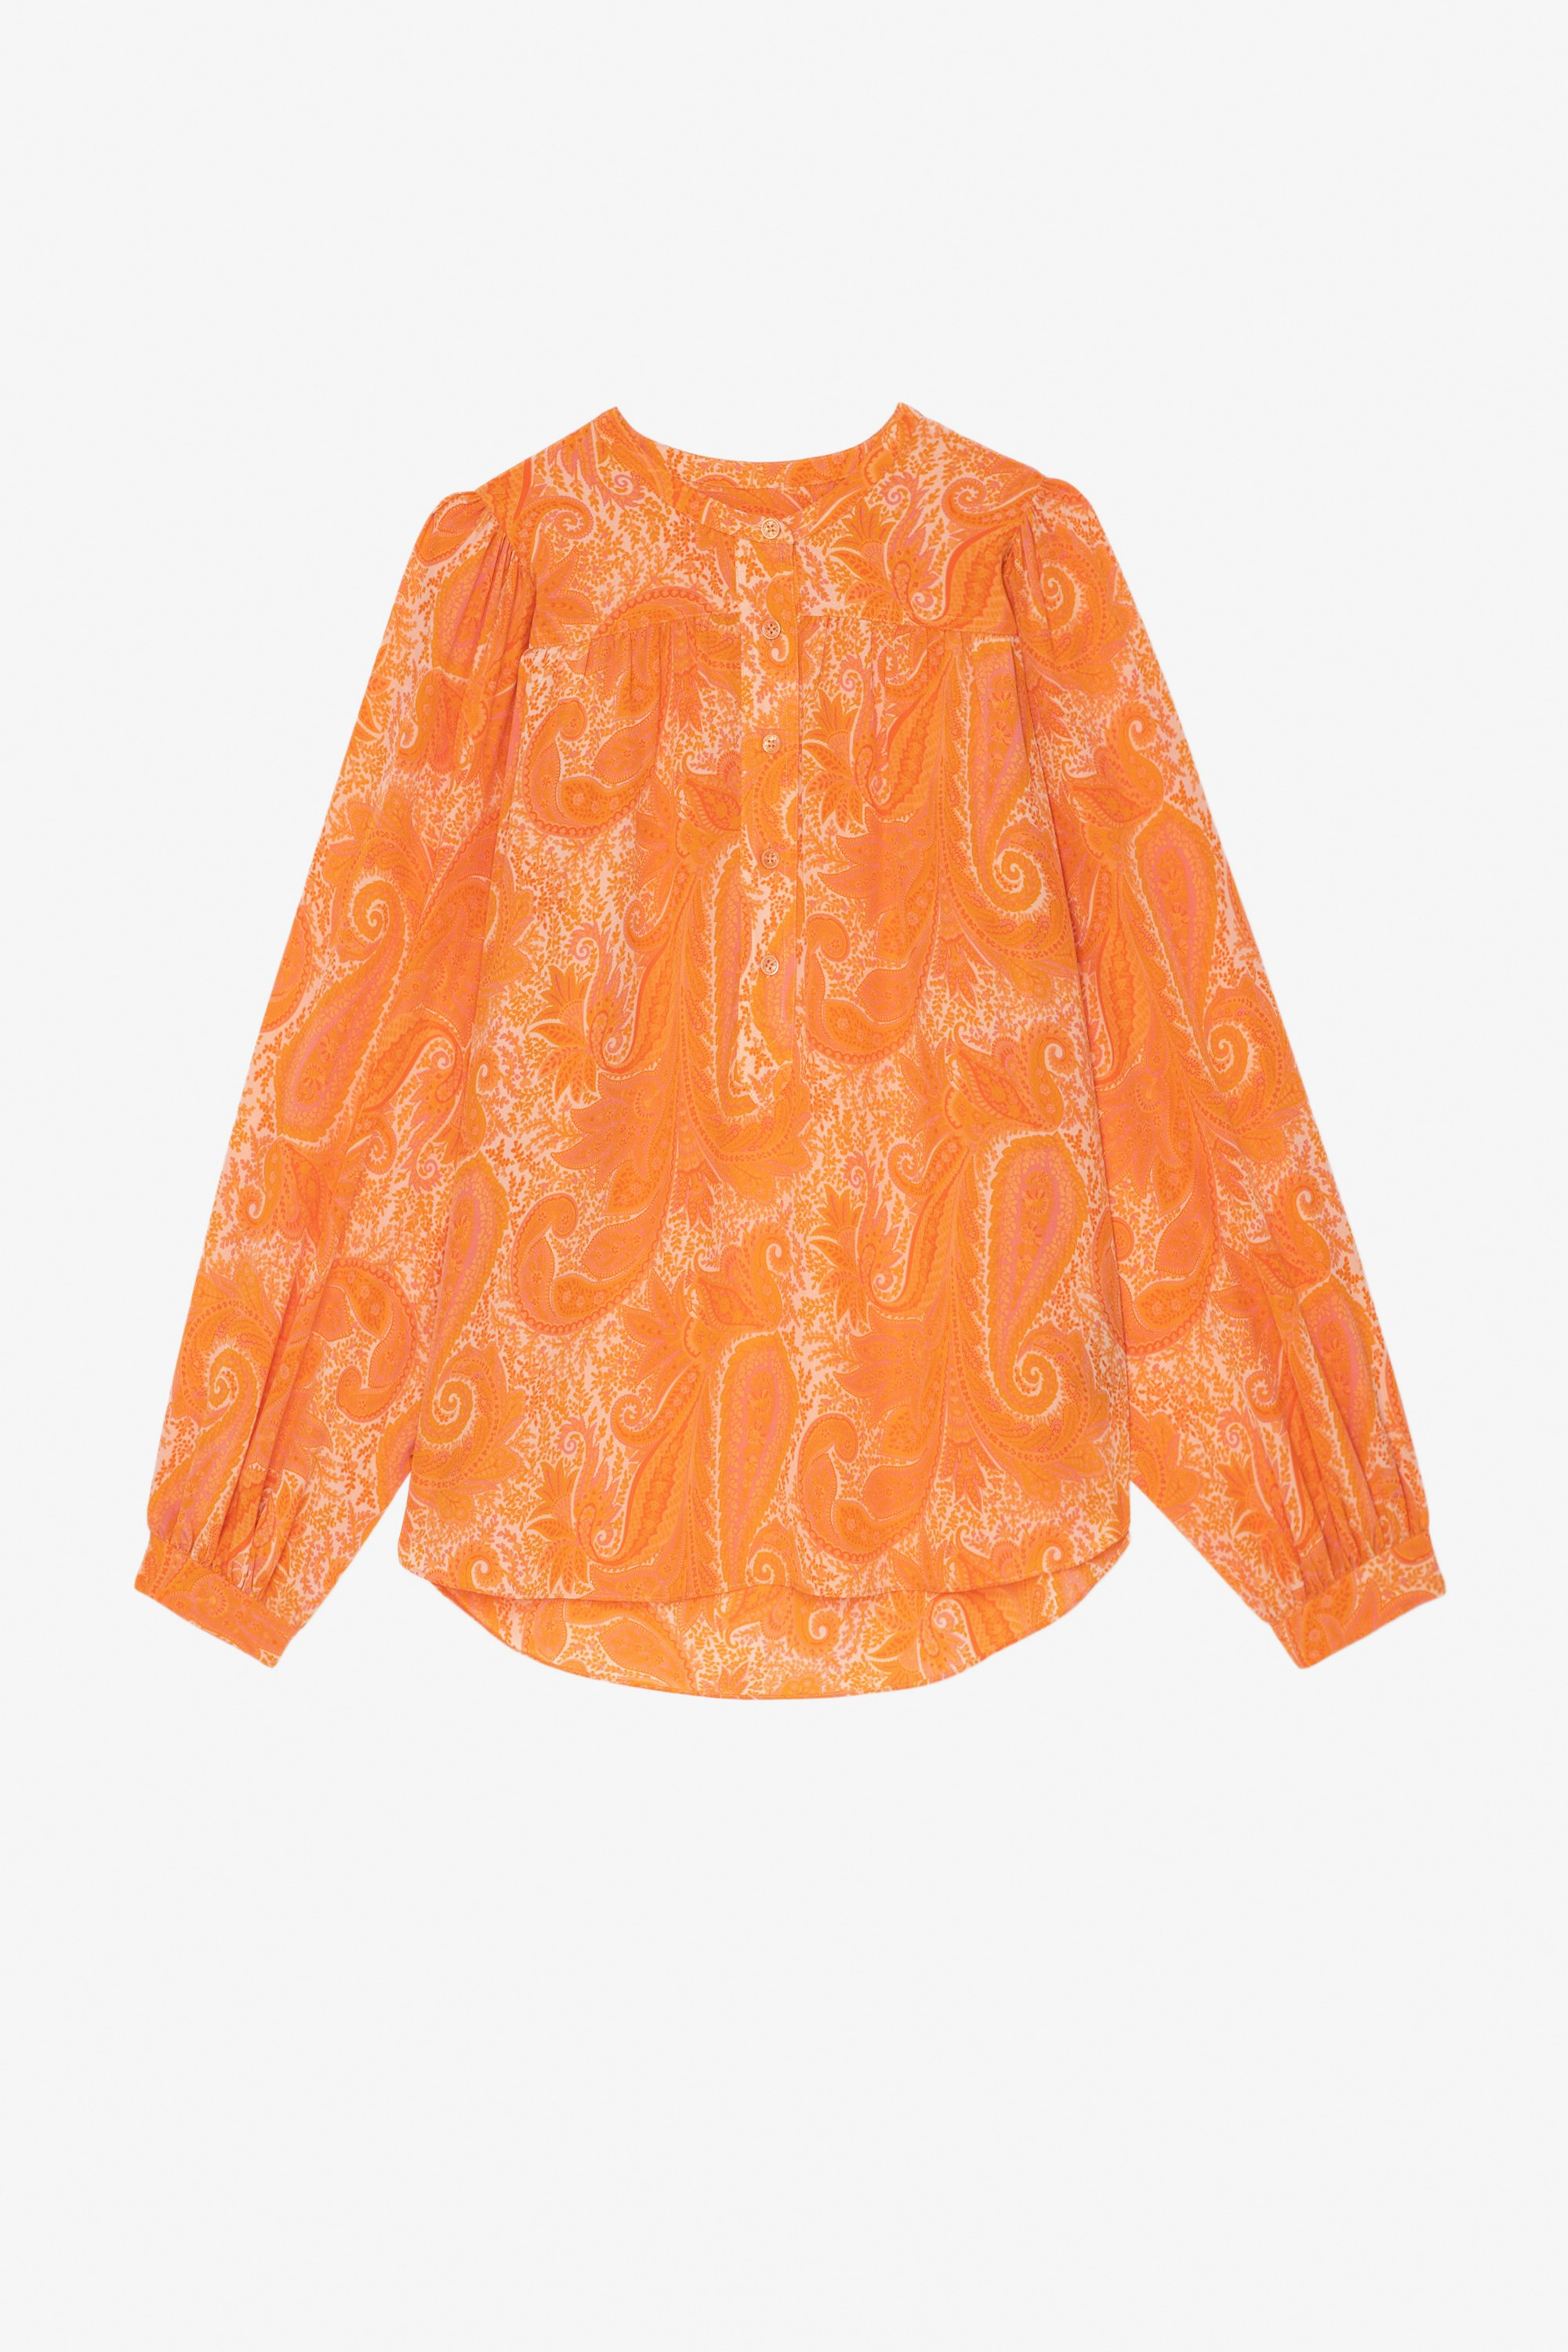 Tigy Blouse Women's orange paisley-print silk blouse